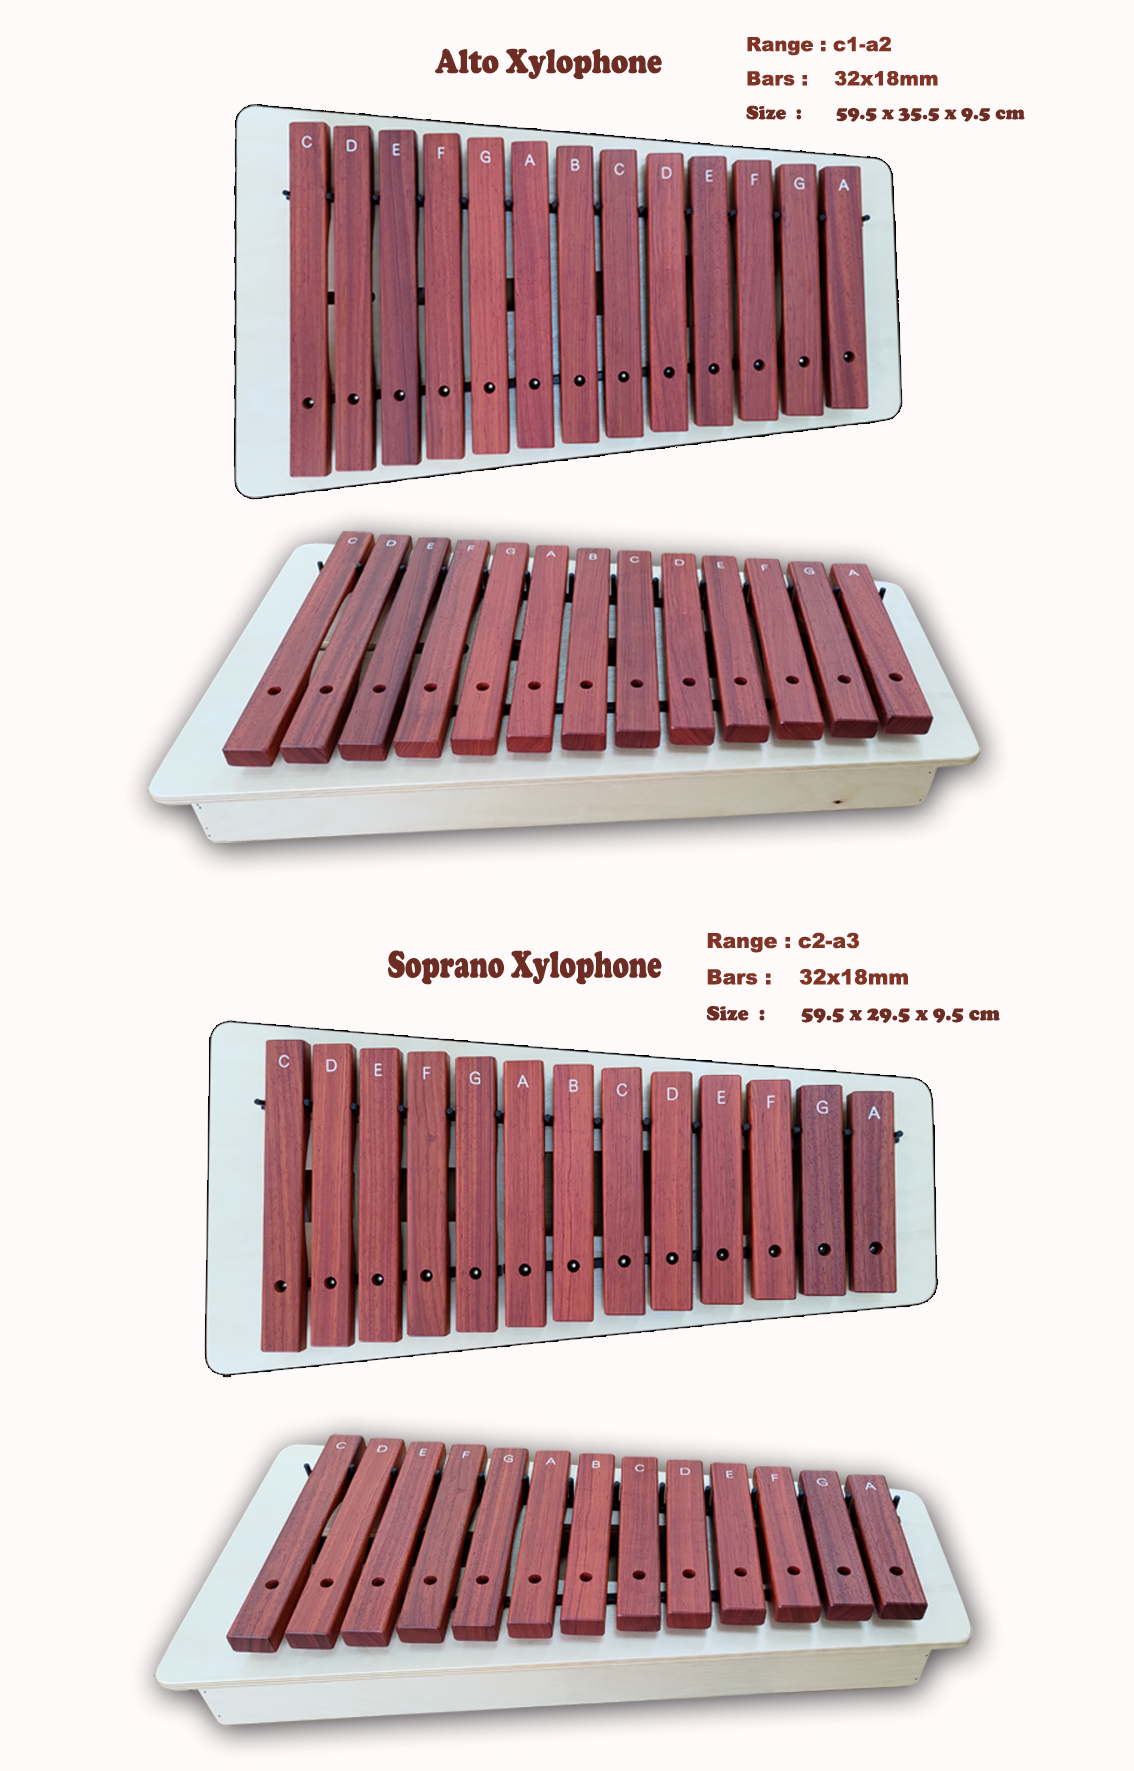 Alto & Soprano Xylophone